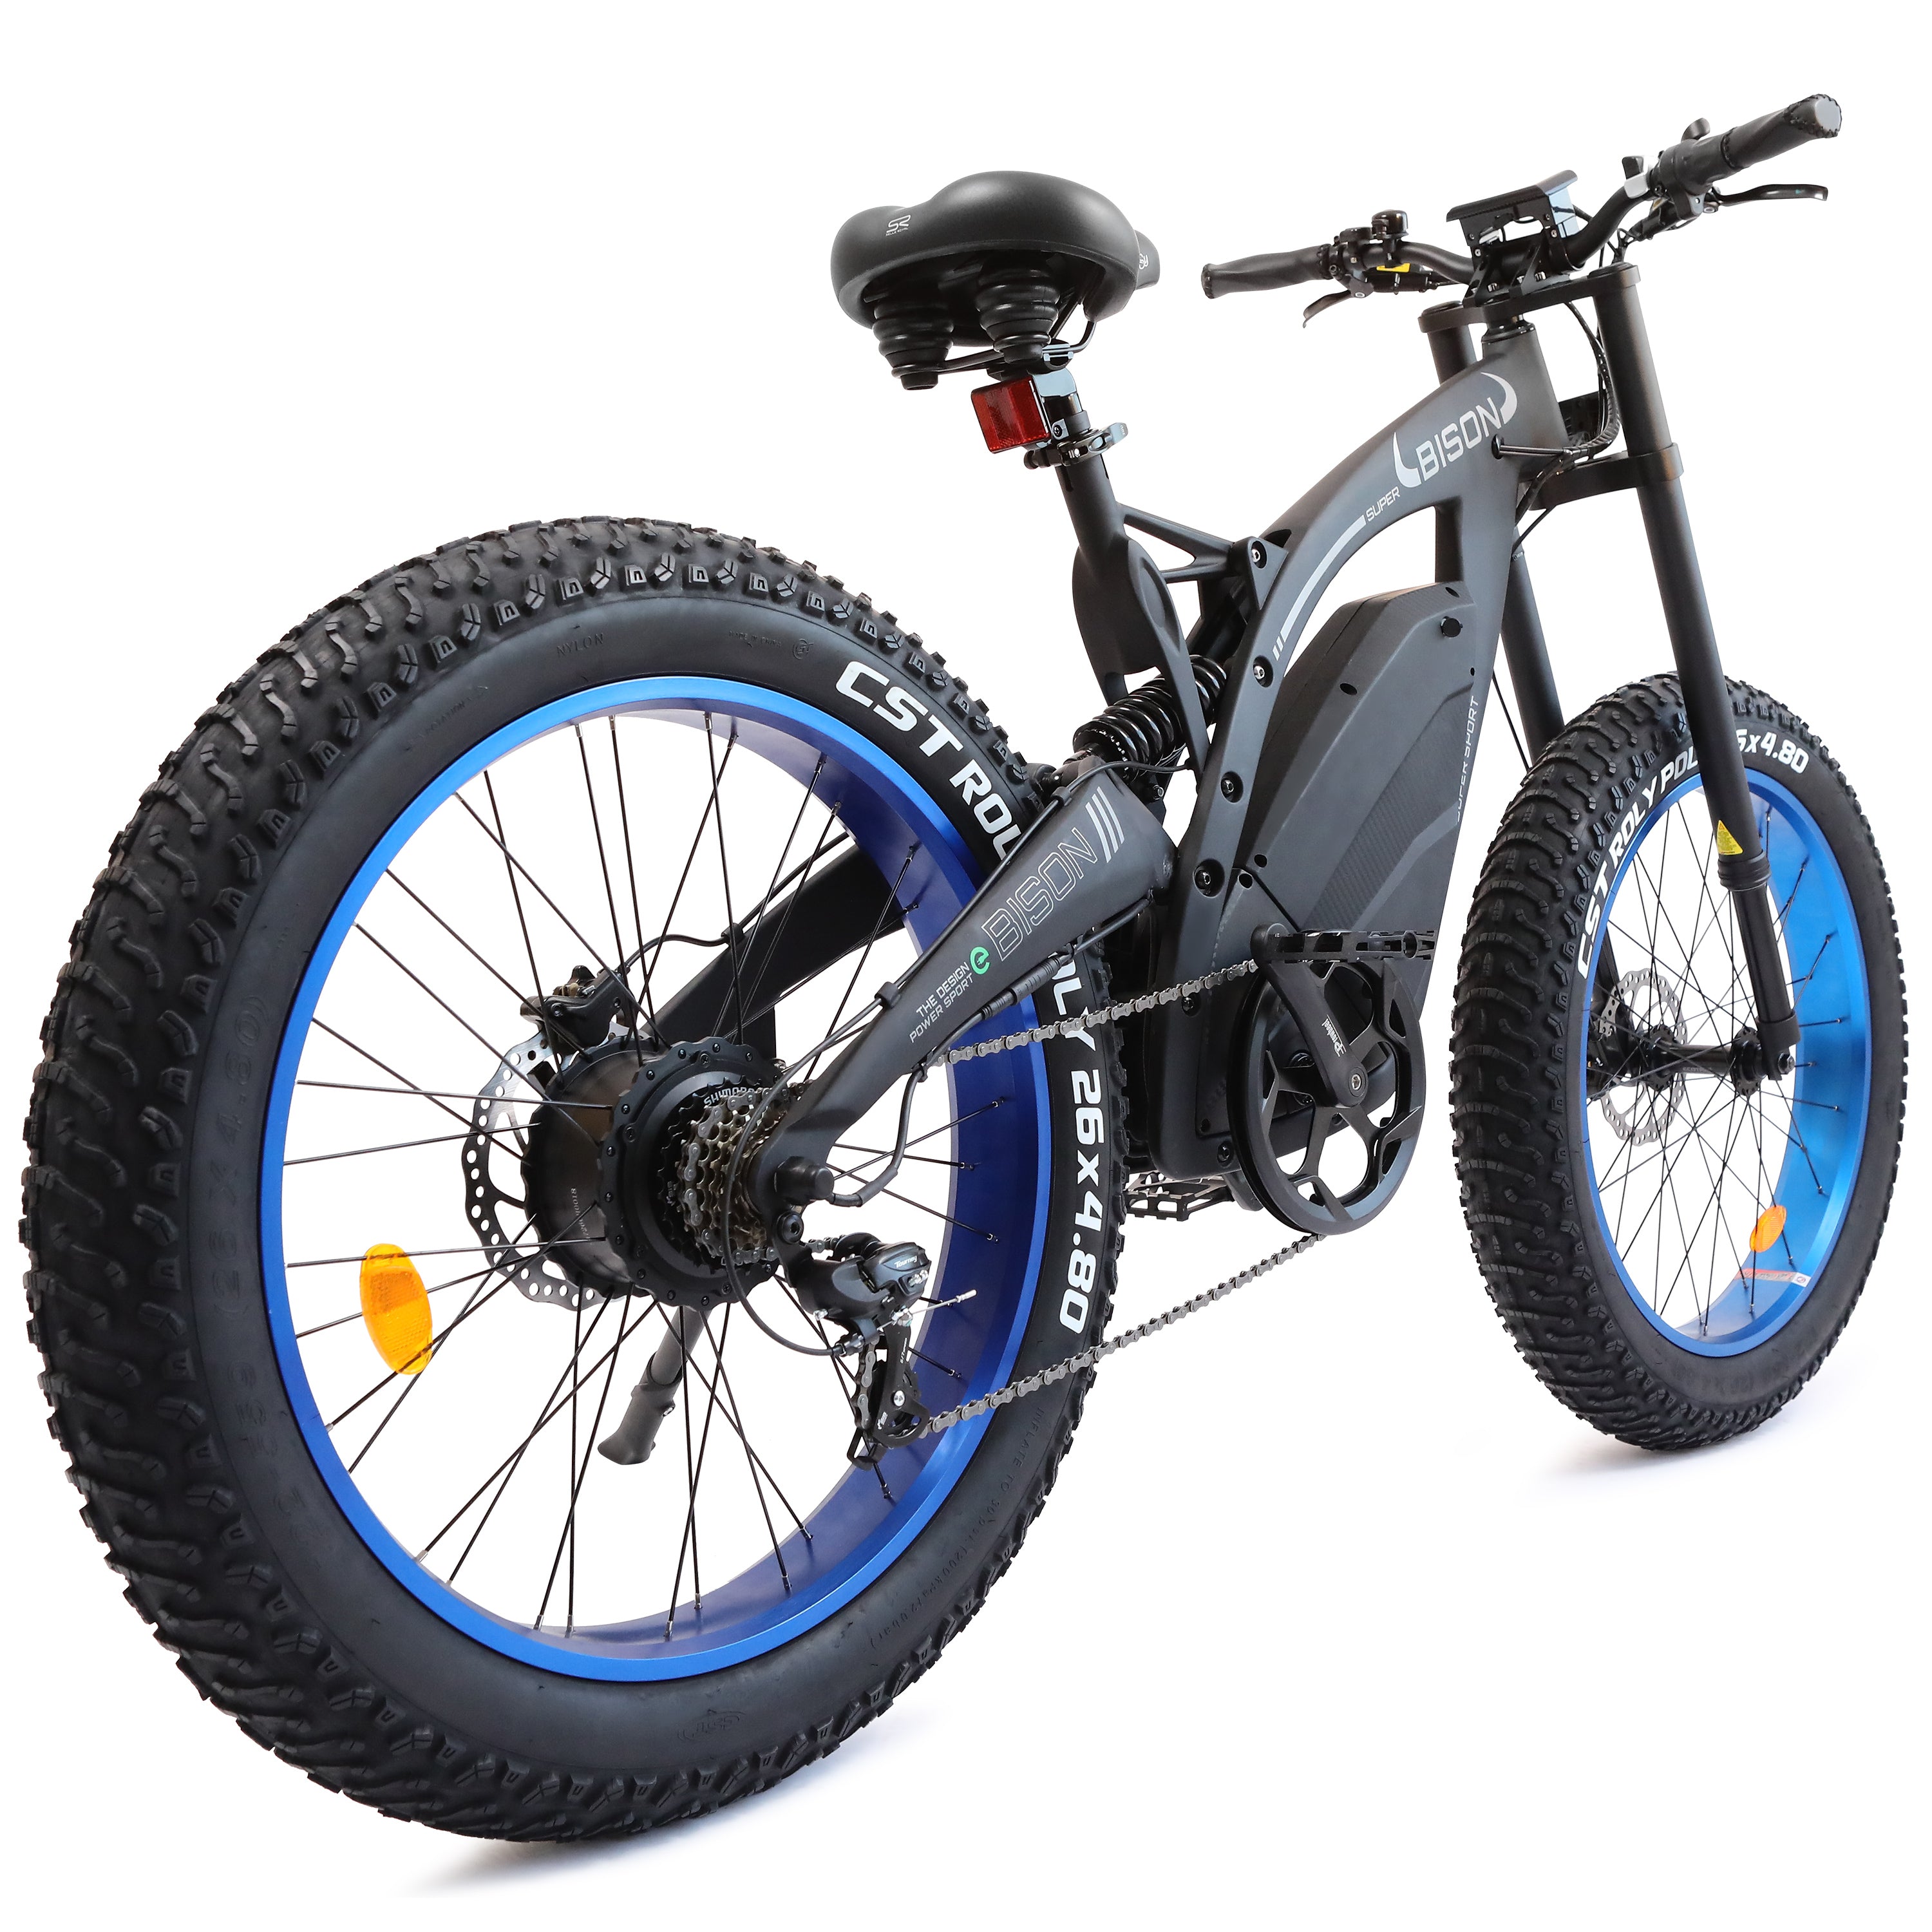 Bison1000w Electric Bicycle 48v Rear Hub Motor